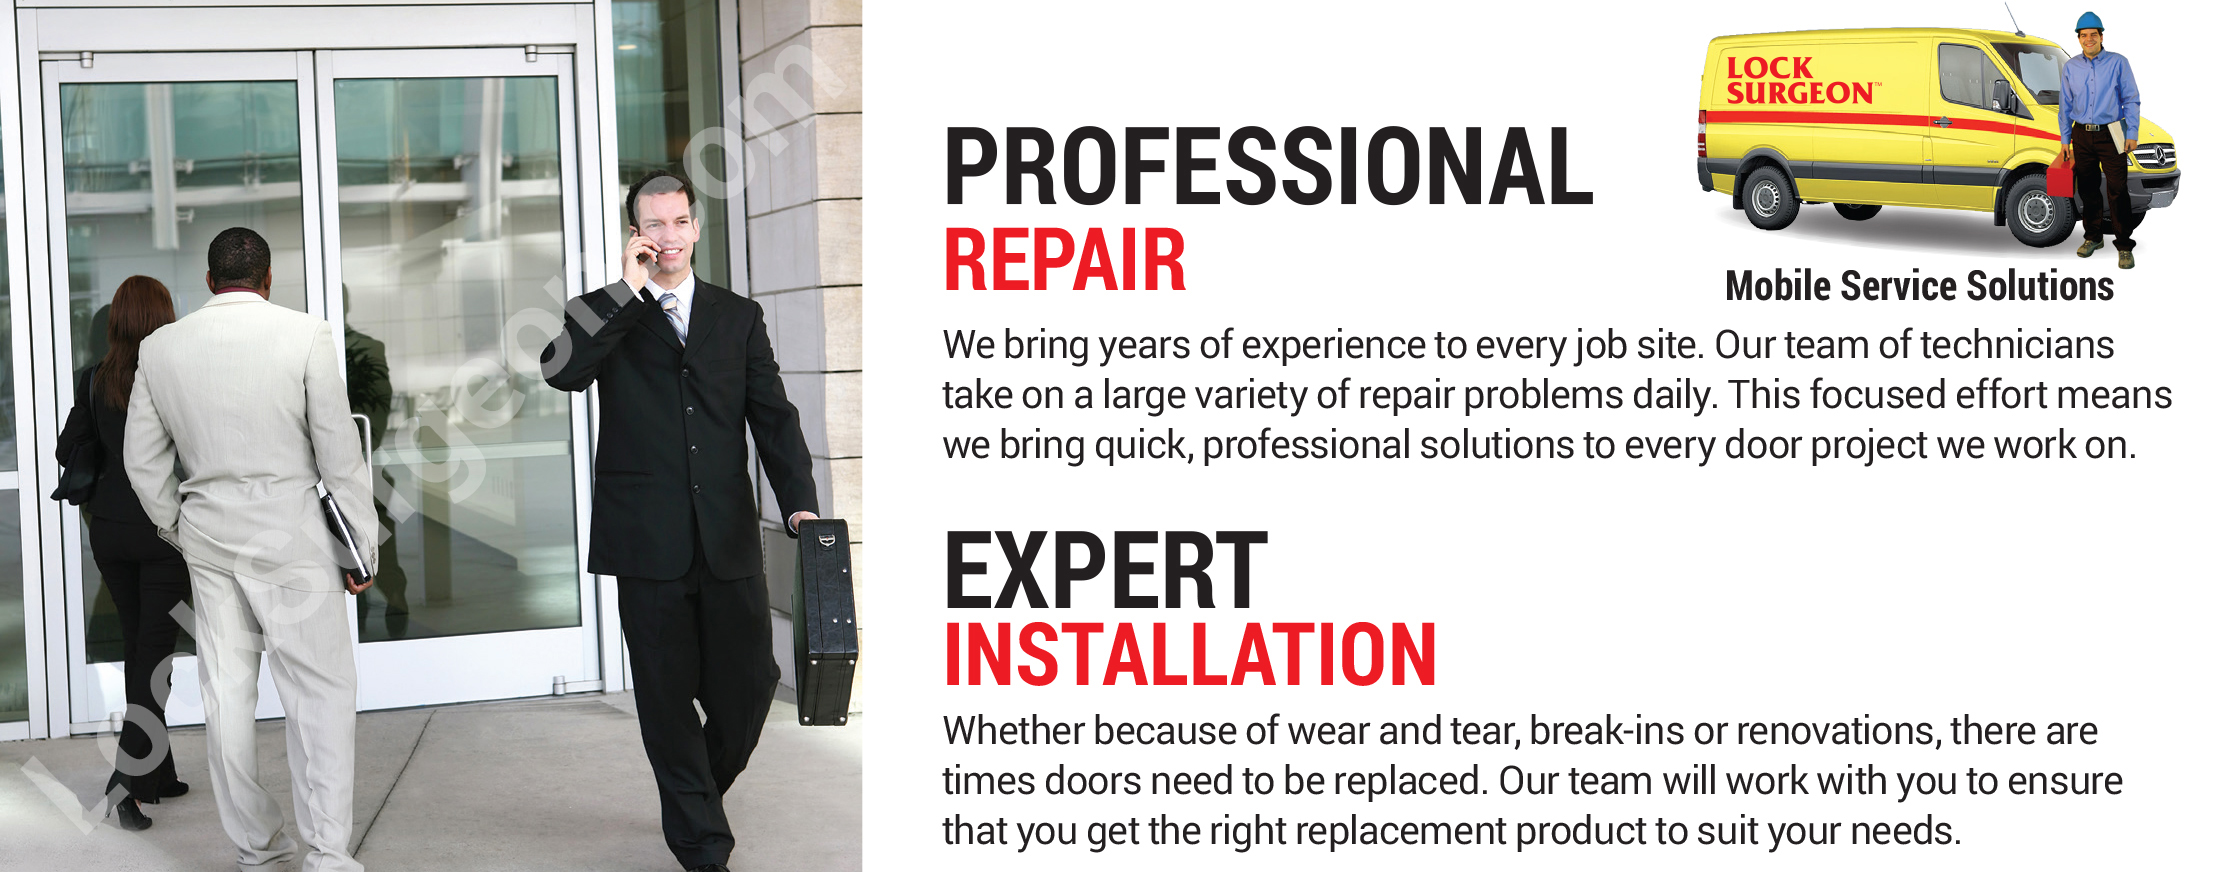 Lock Surgeon provides mobile door repair service for door break-in repair or door hinge repair.